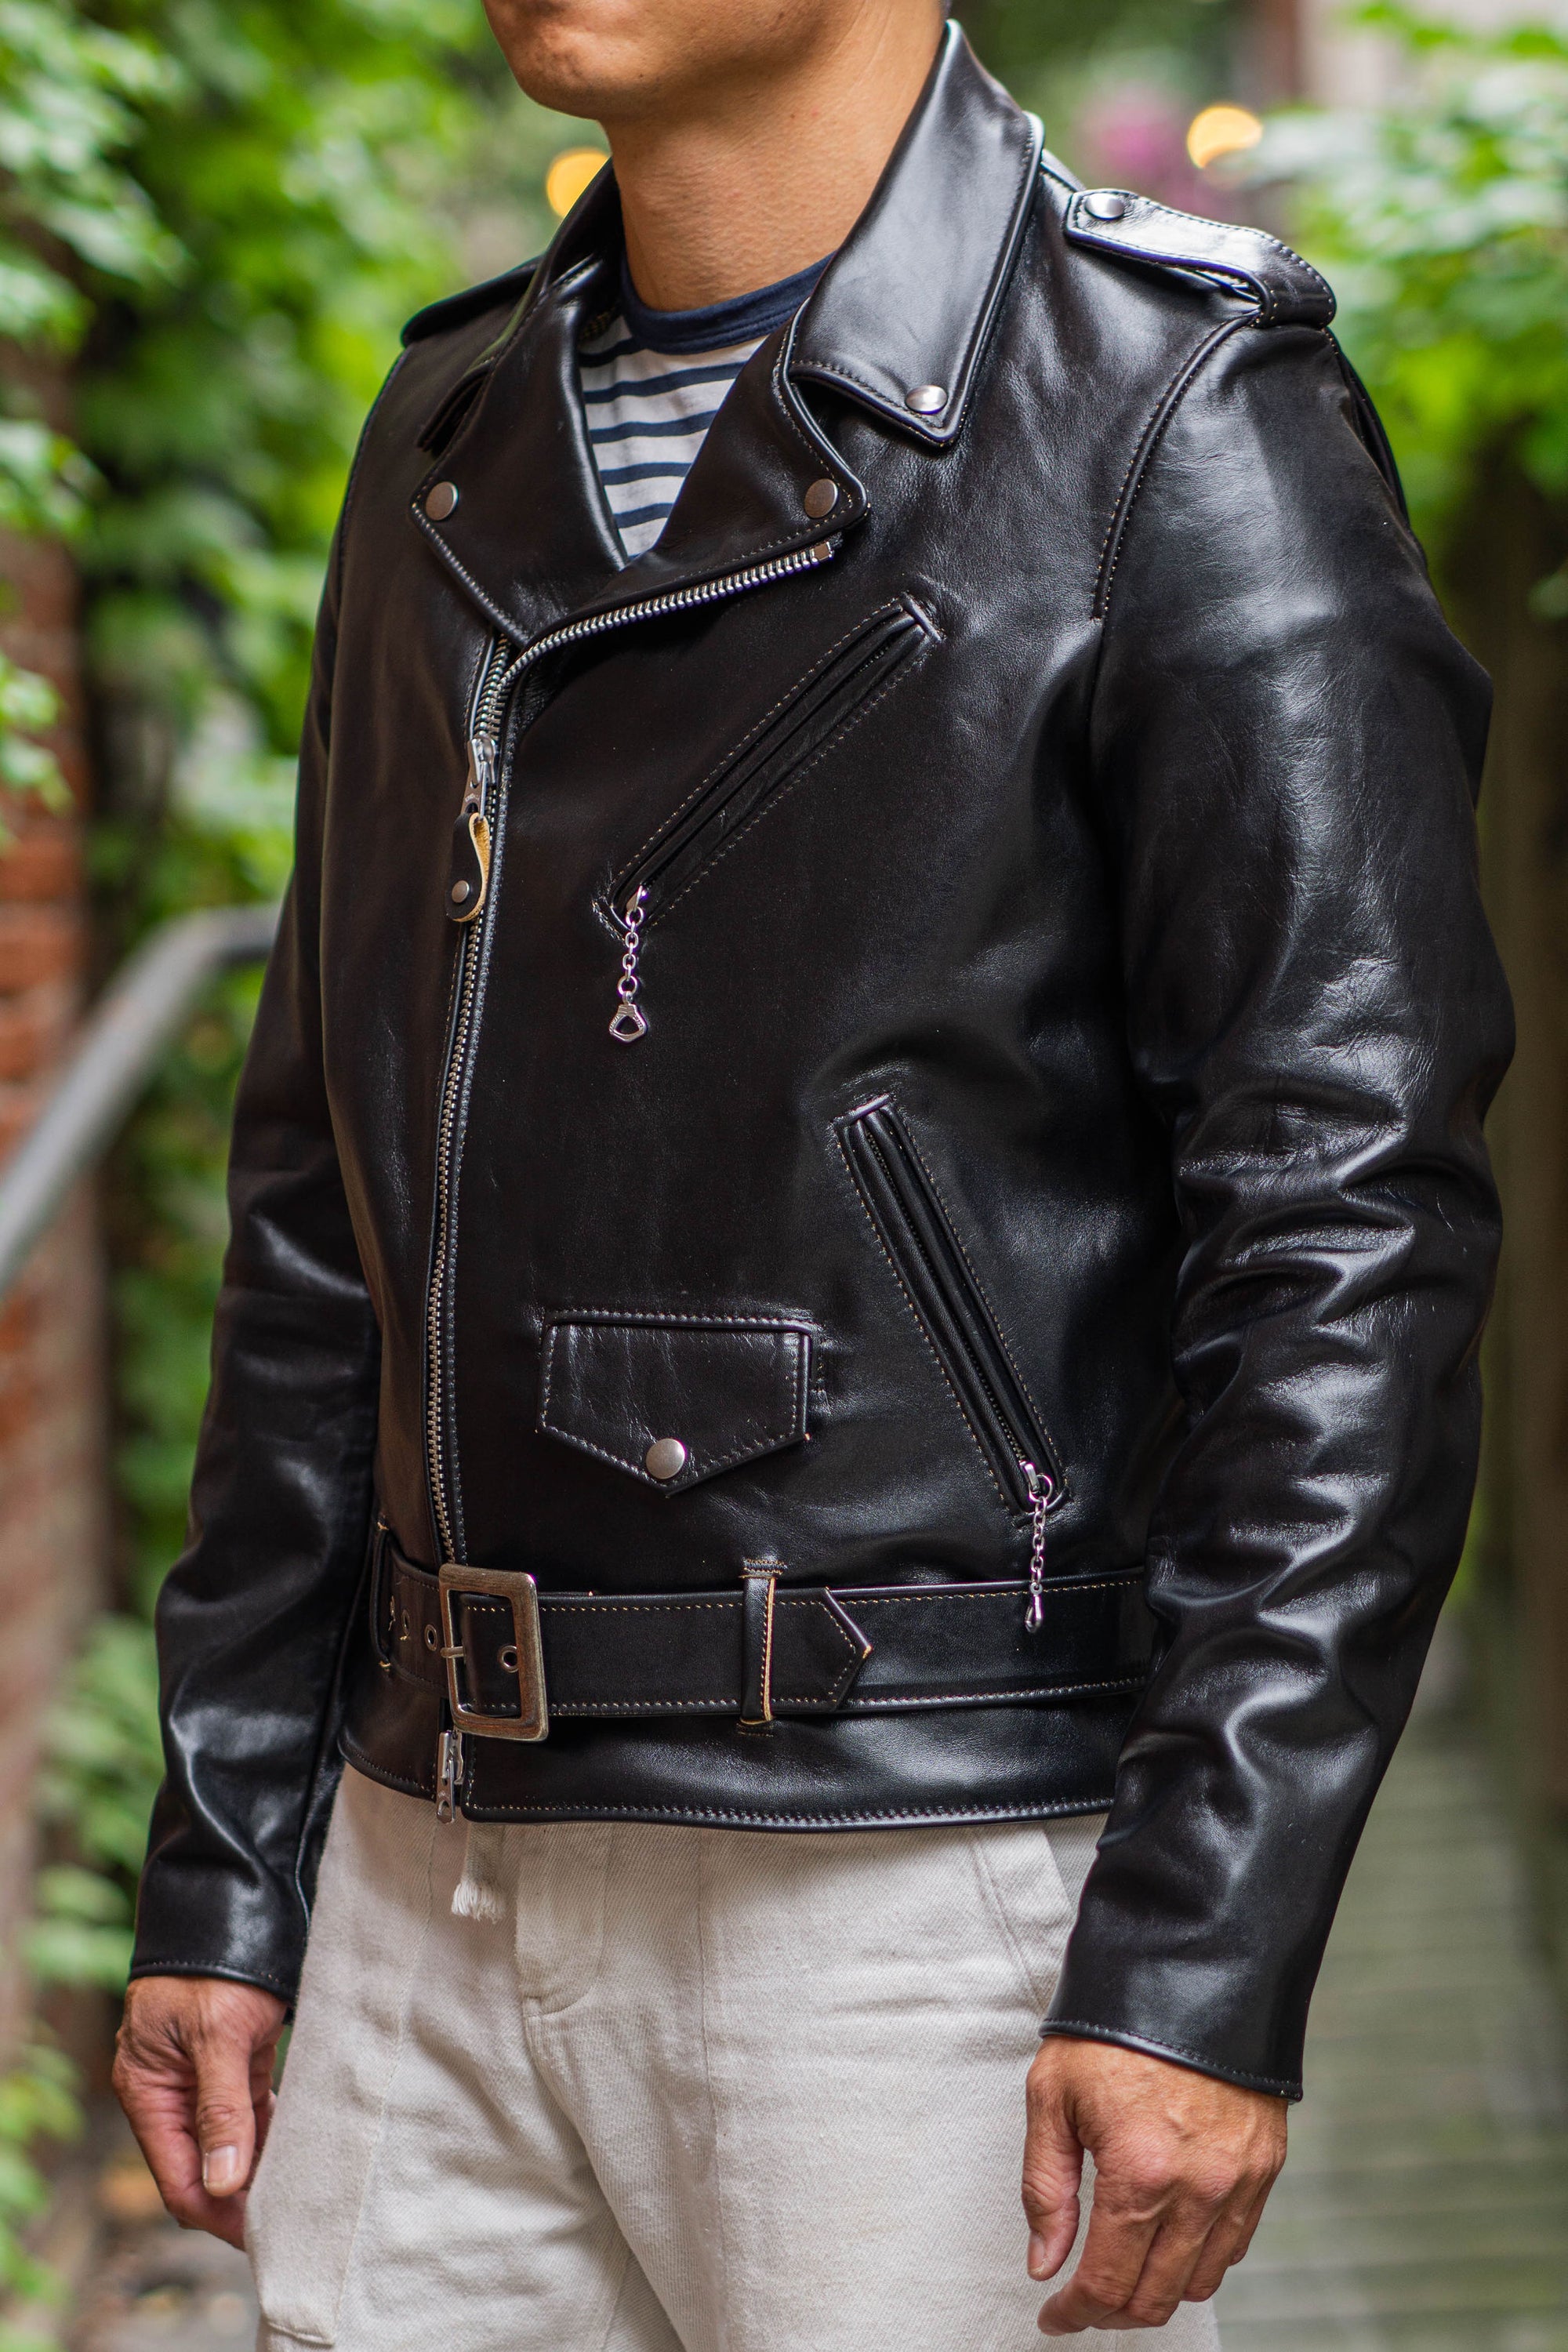 Leather Biker Jacket Choice Of Every Biker | by leathernxg | Medium